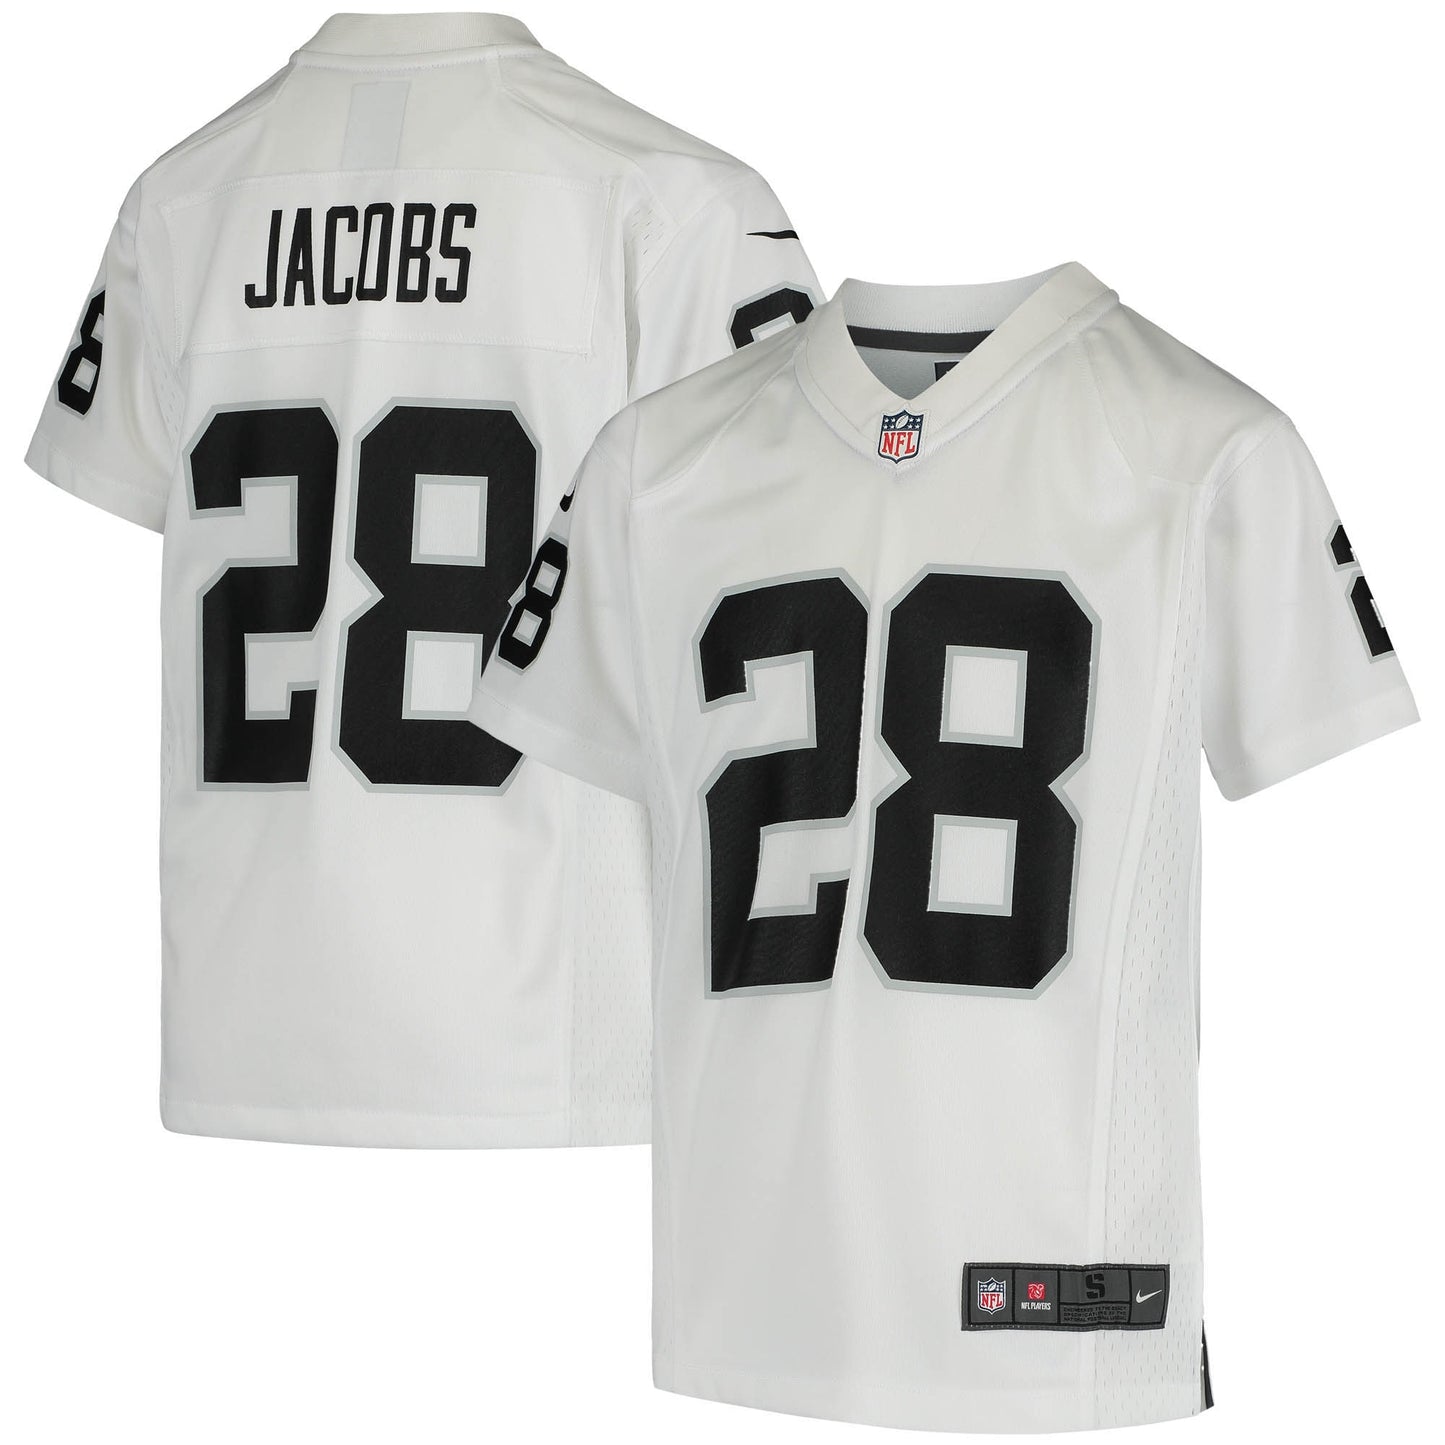 Josh Jacobs Las Vegas Raiders Nike Youth Game Jersey - White